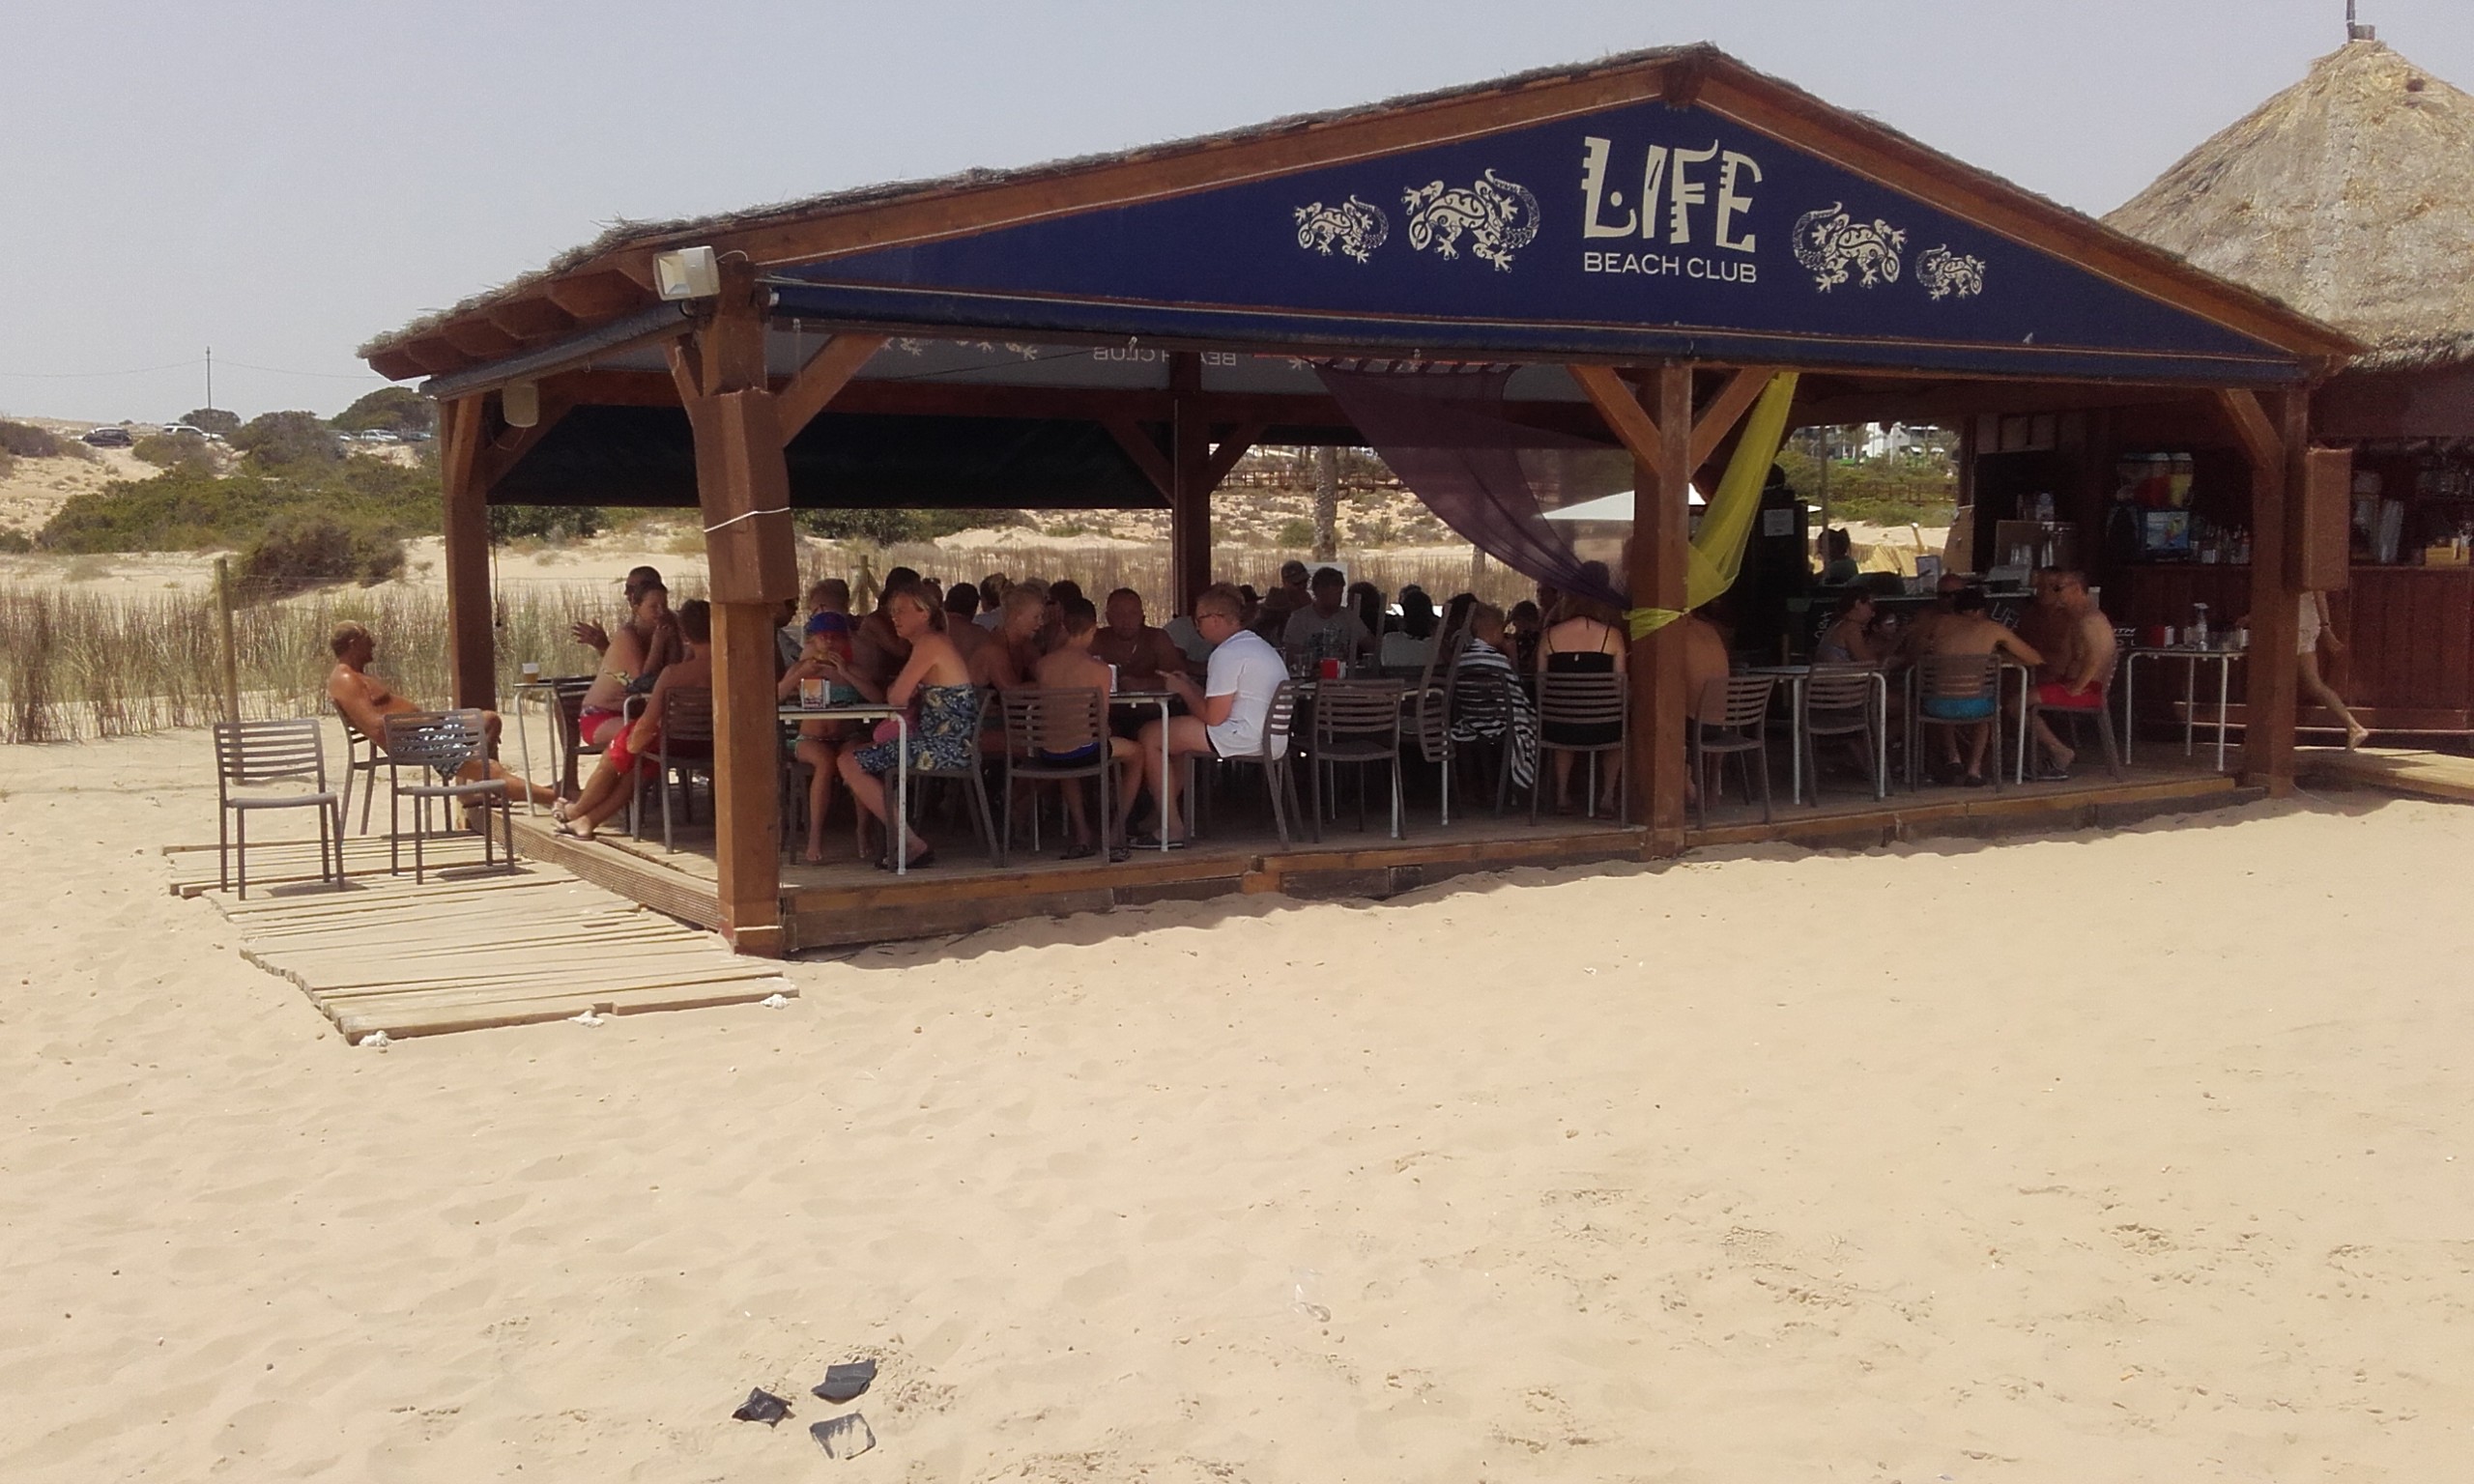 One of the beach bars